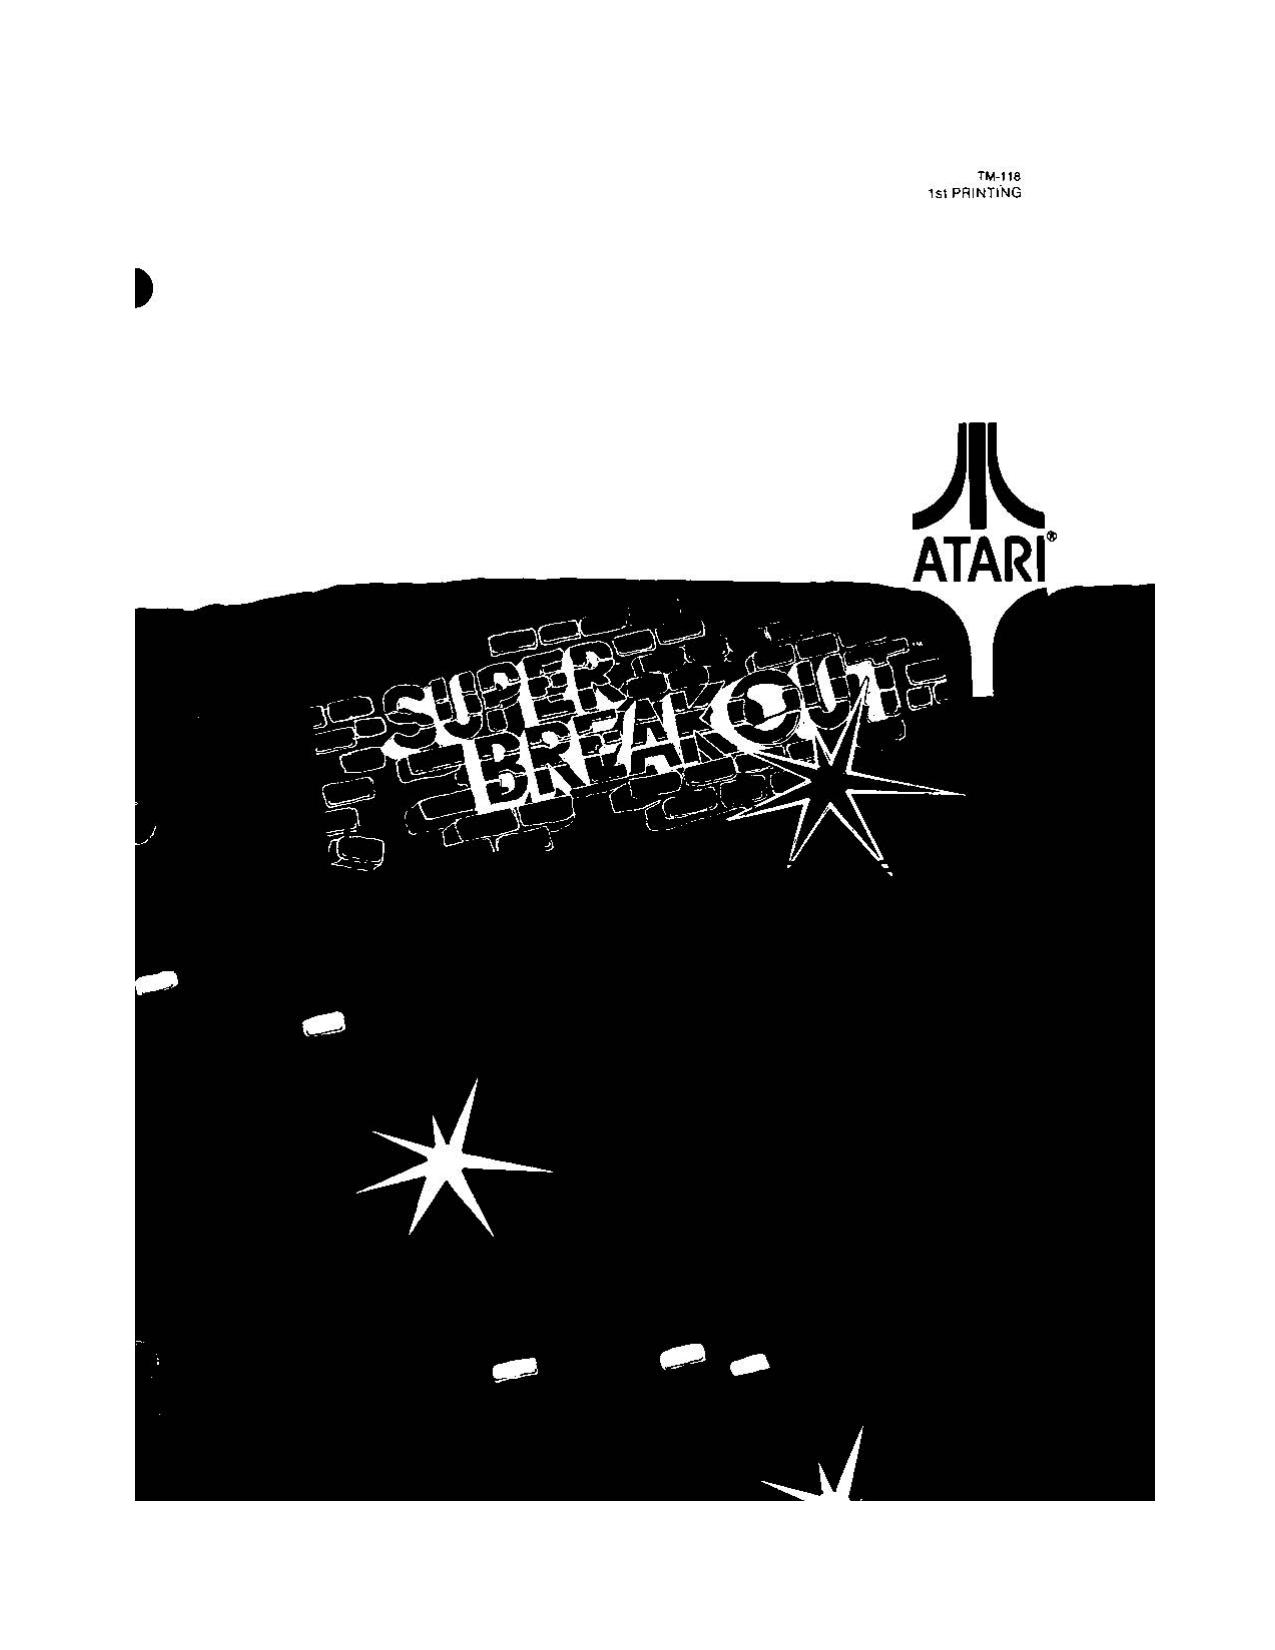 Super Breakout (TM-118 1st Printing) (Op-Maint-Serv-Parts) (U)